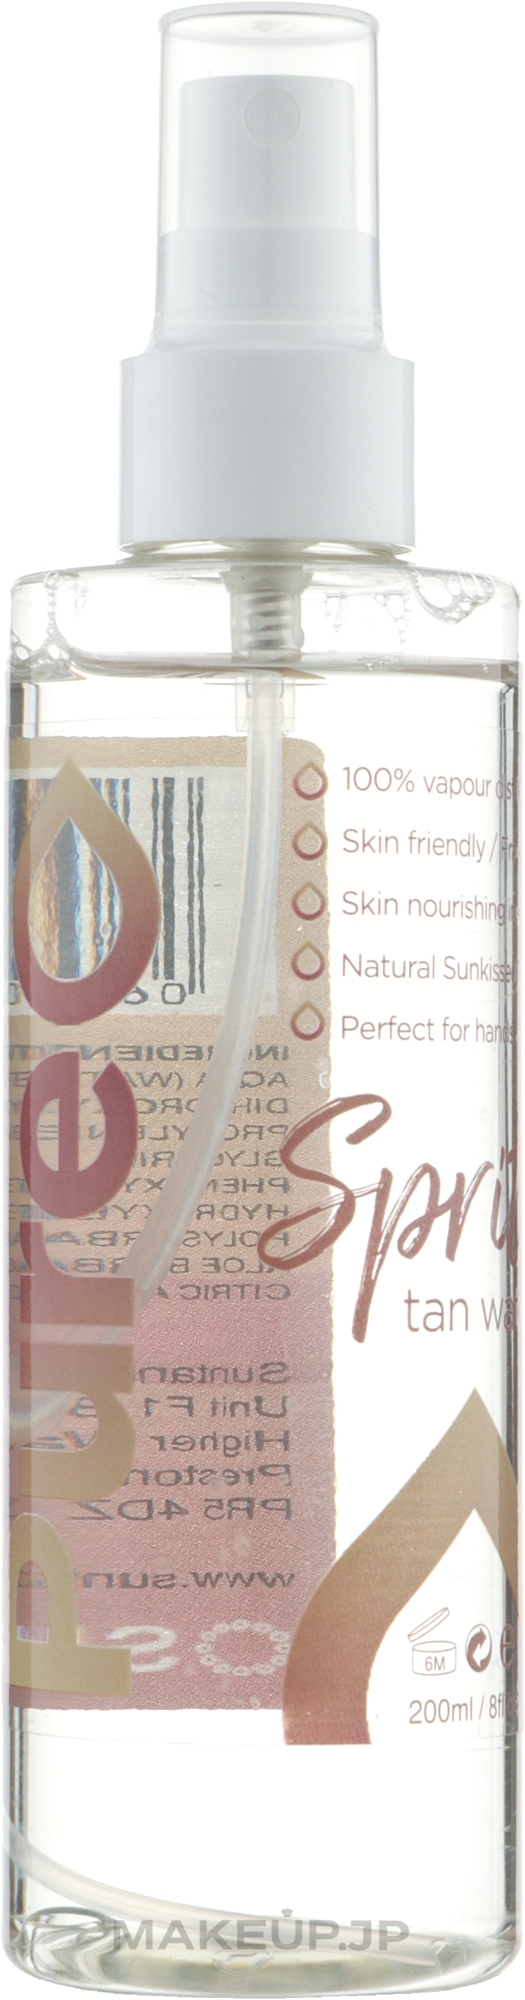 Face & Body Self-Tan - Suntana Pure Spritz Self Tan Water — photo 200 ml